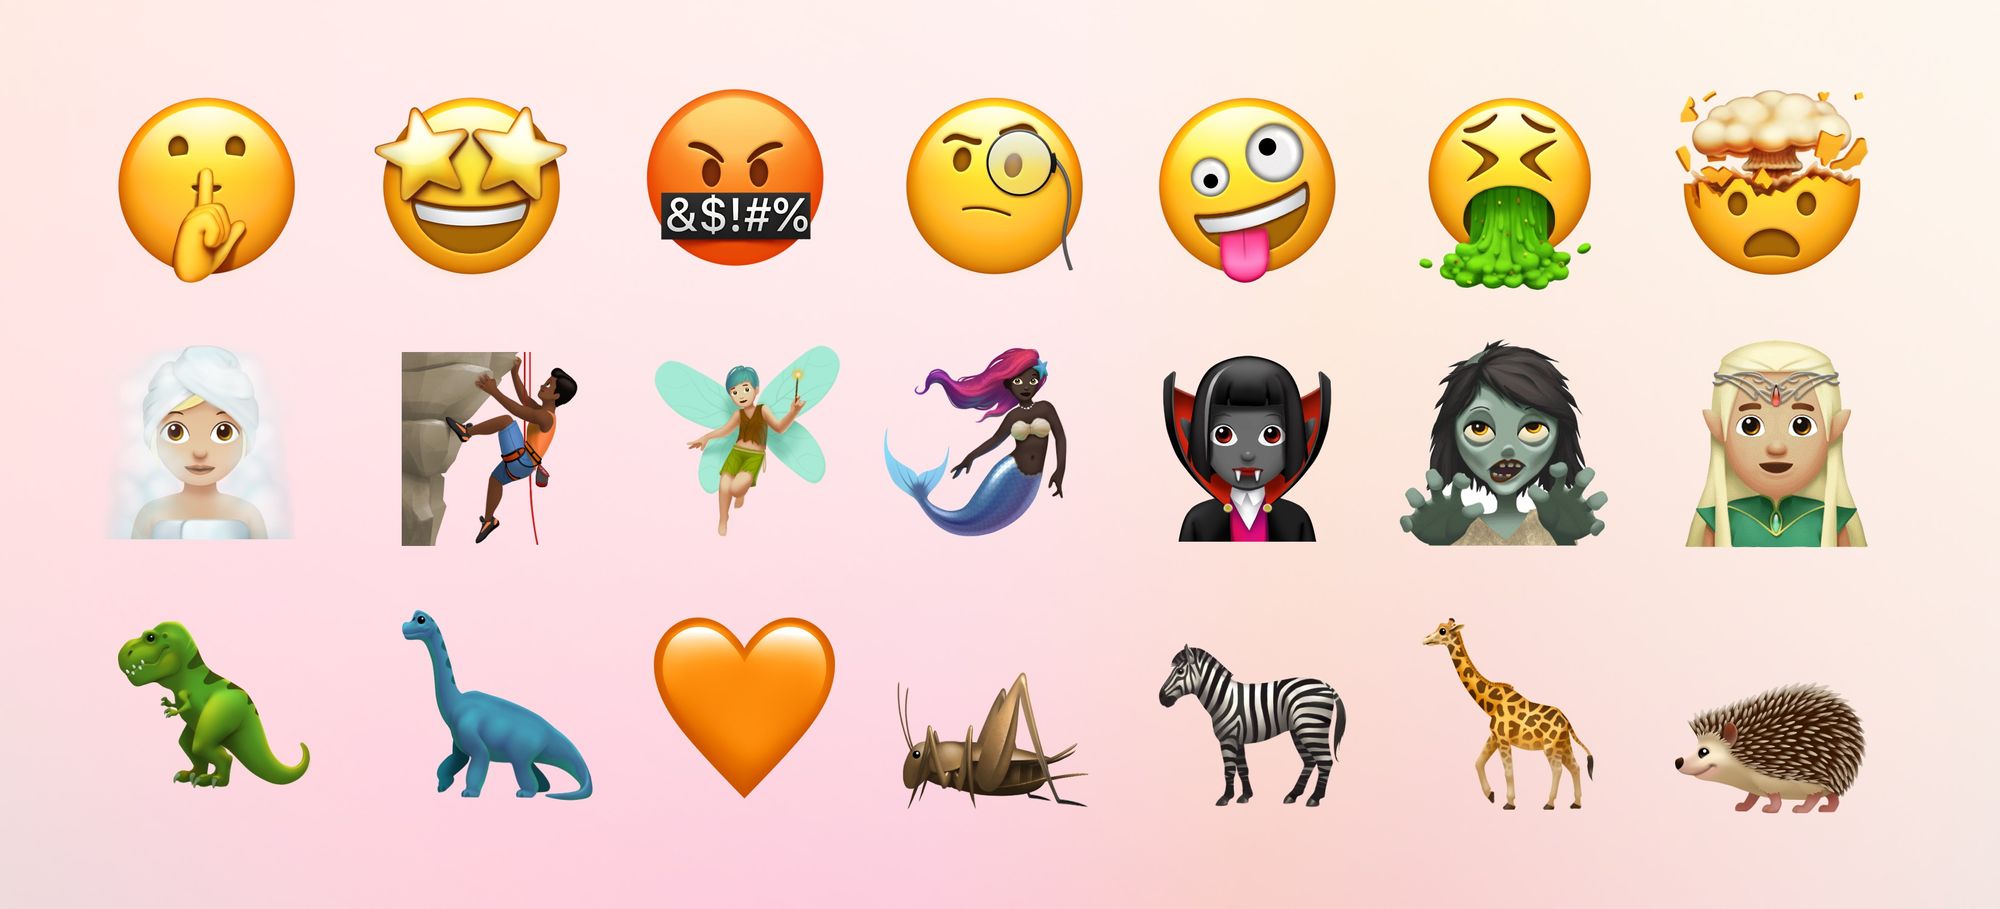 New Emojis in iOS 11.1